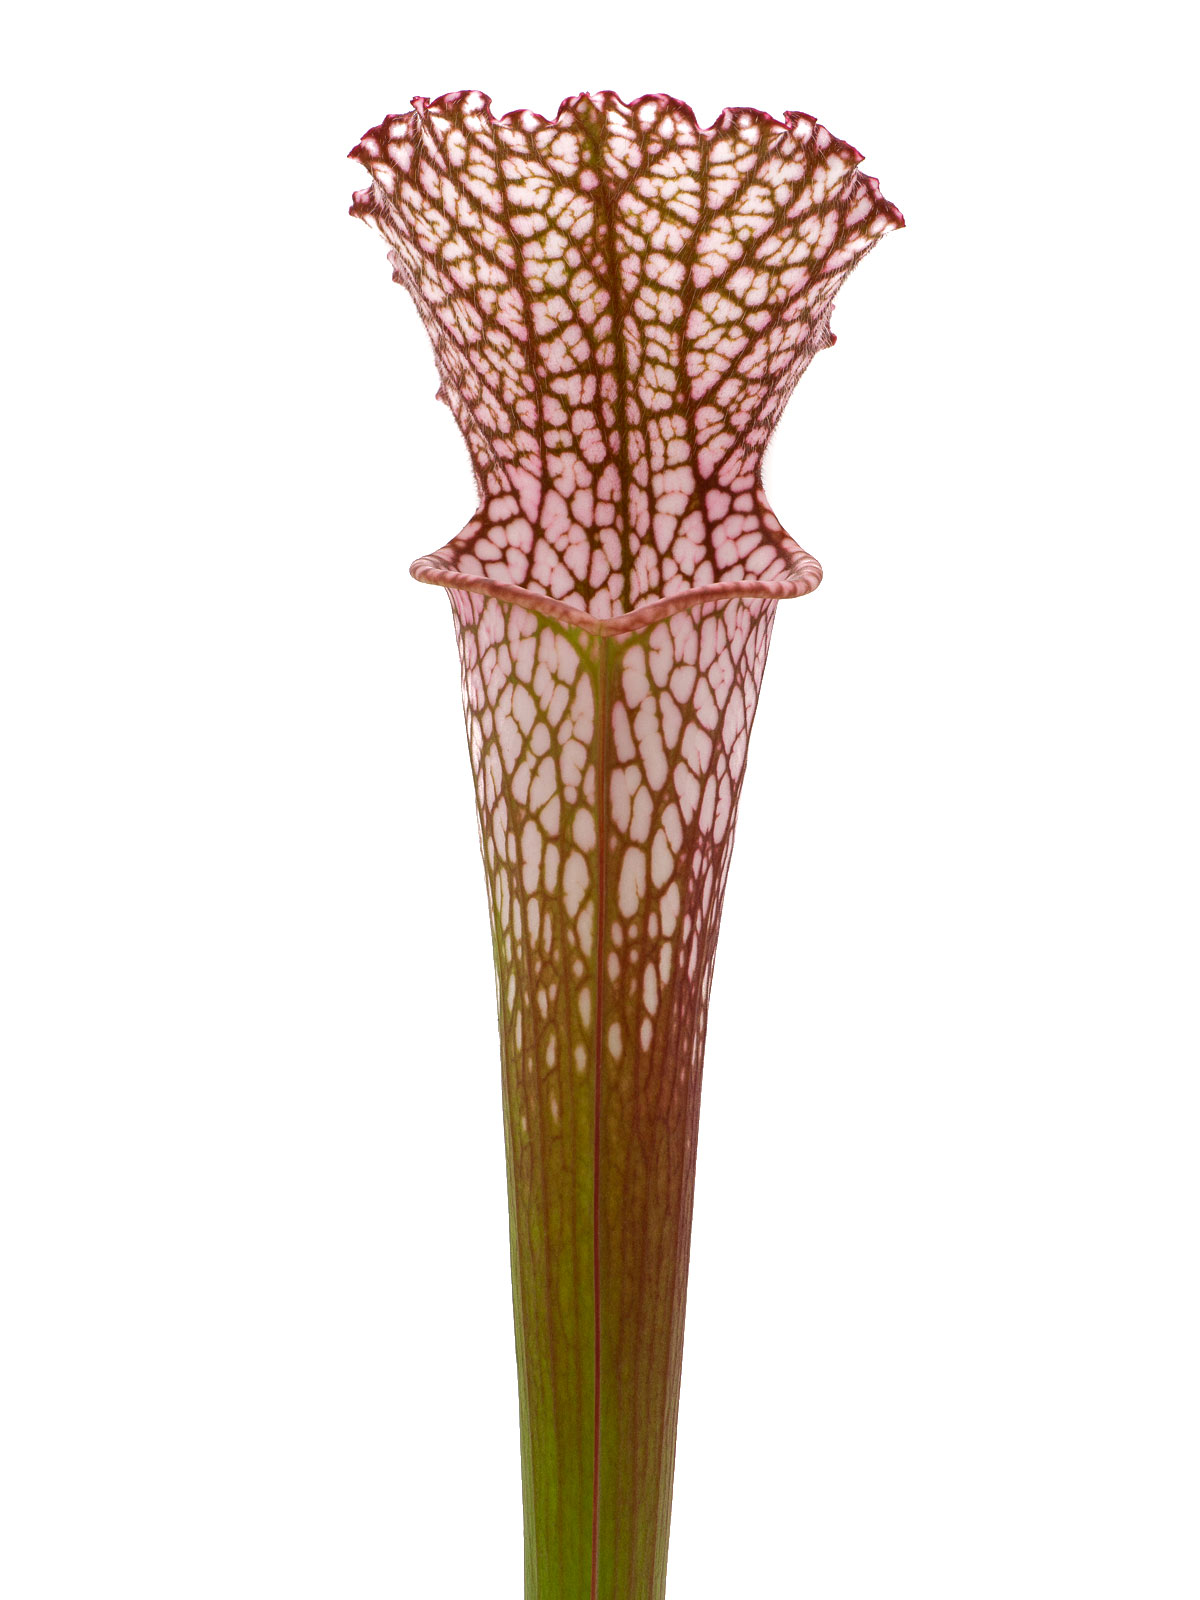 S. leucophylla - red pitcher, Johannes Betz